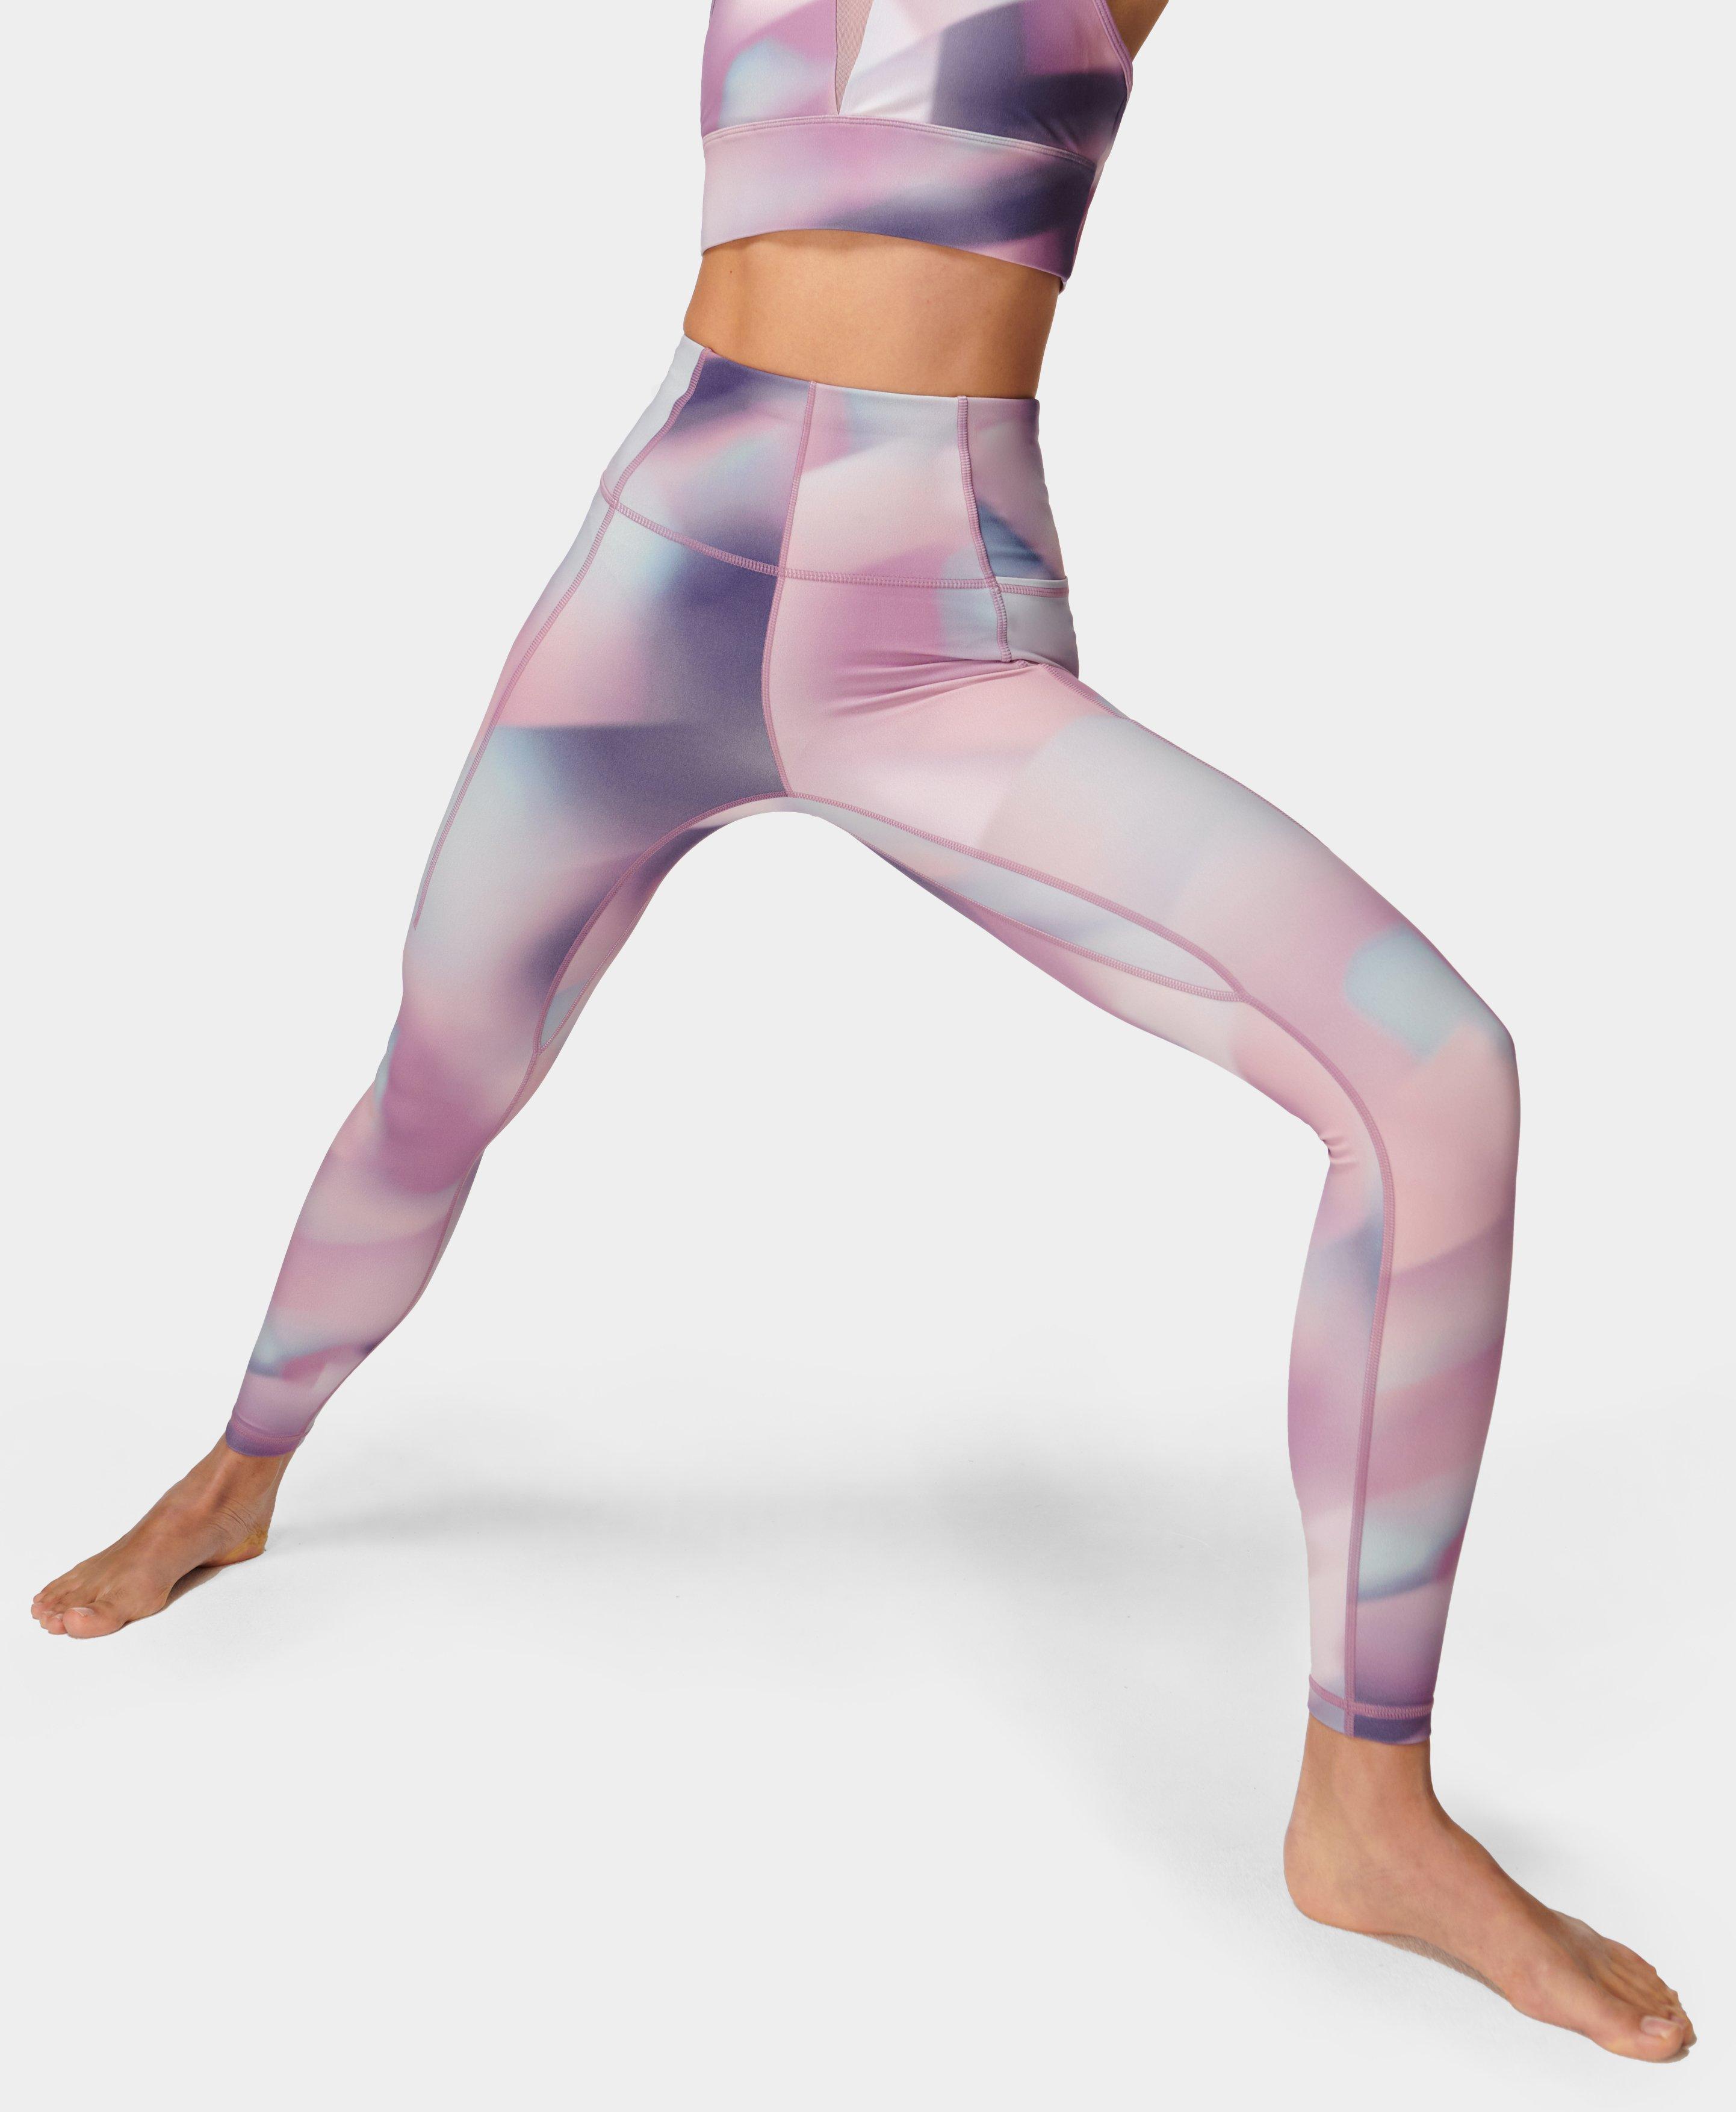 Abcnature Yoga Pants for Women, 3D Print Yoga Leggings, Workout